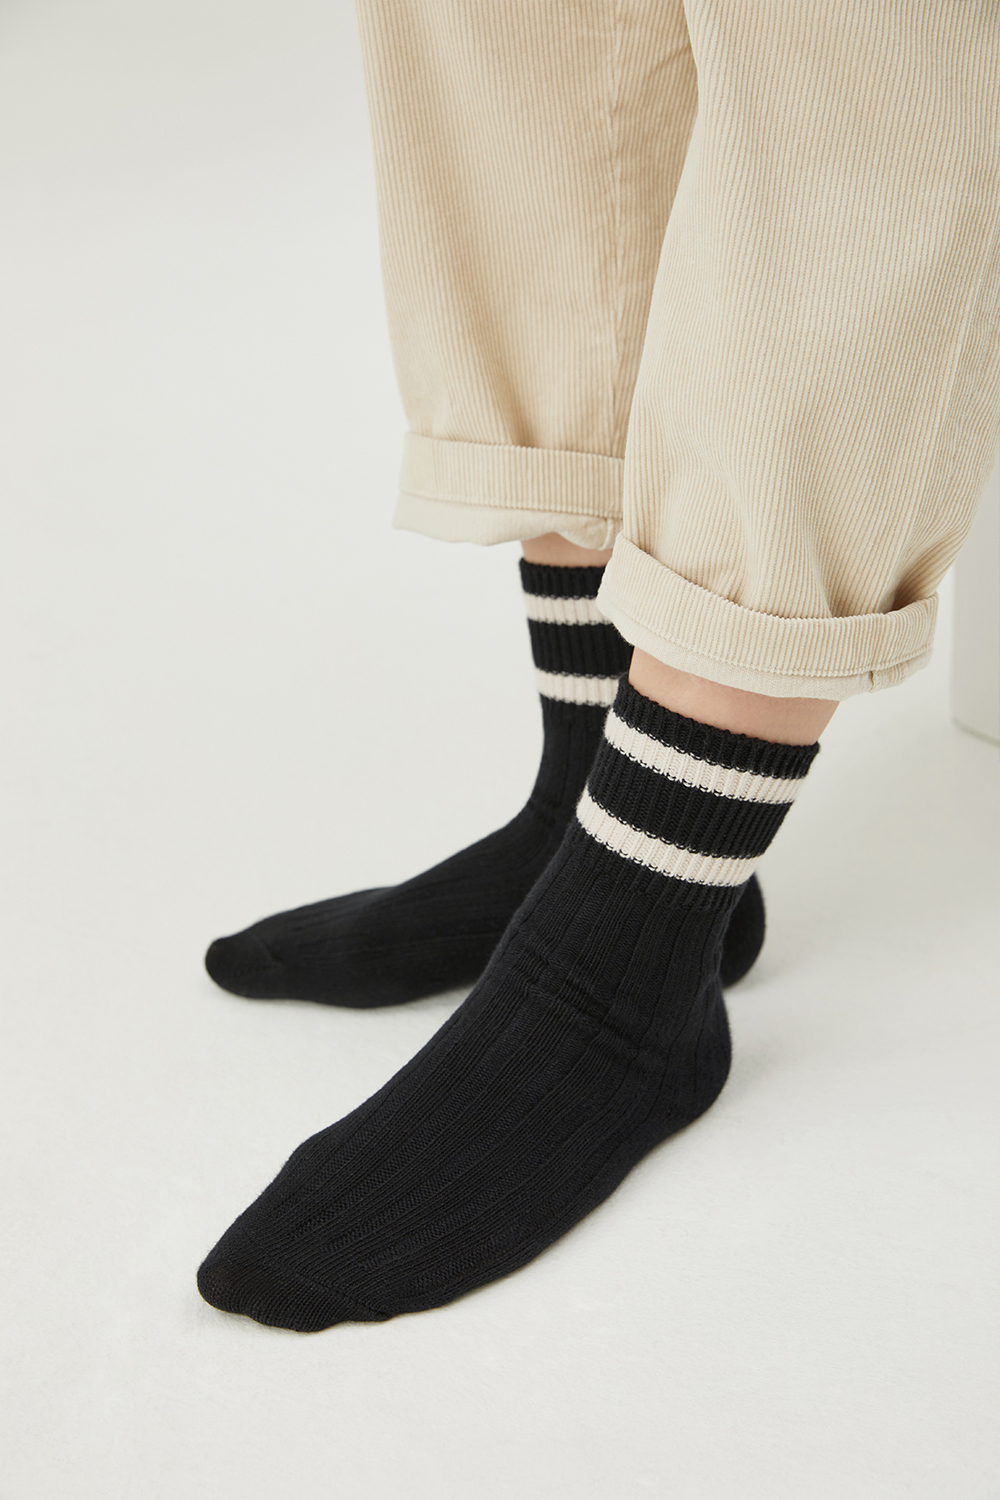 socks product image-S4L8